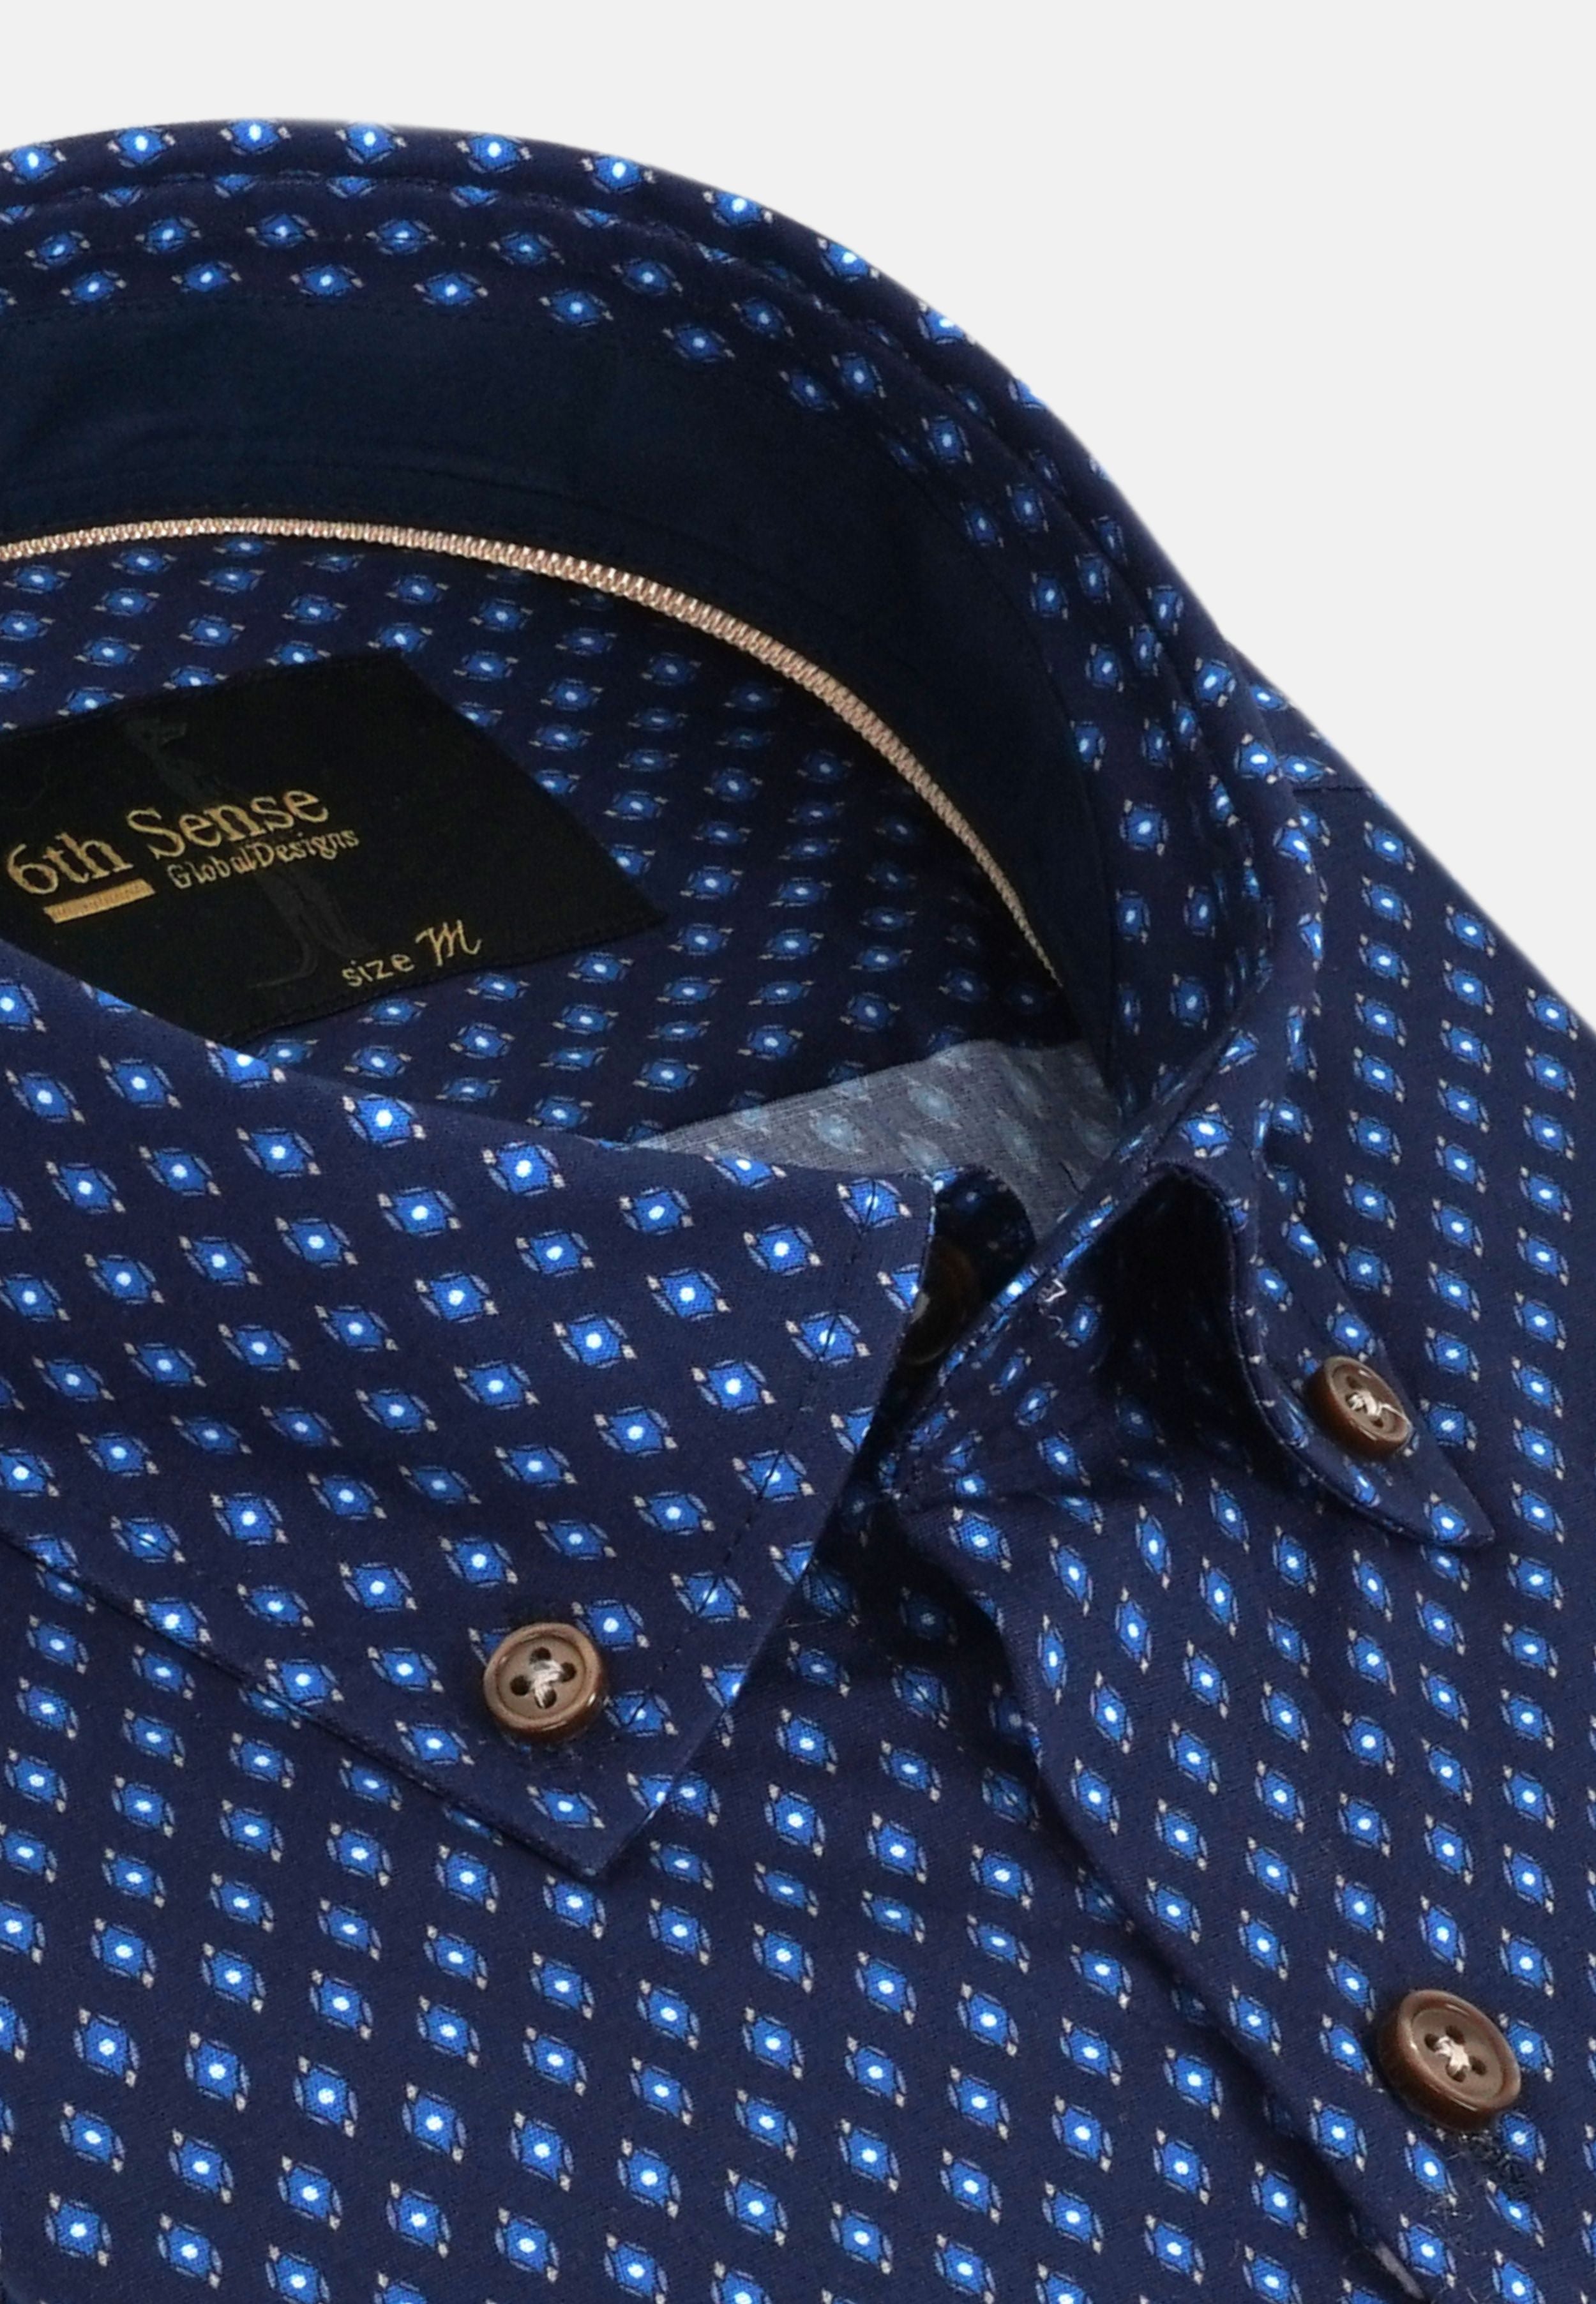 Men's Button Down Navy/Blue Circle Print Shirt-Collar View